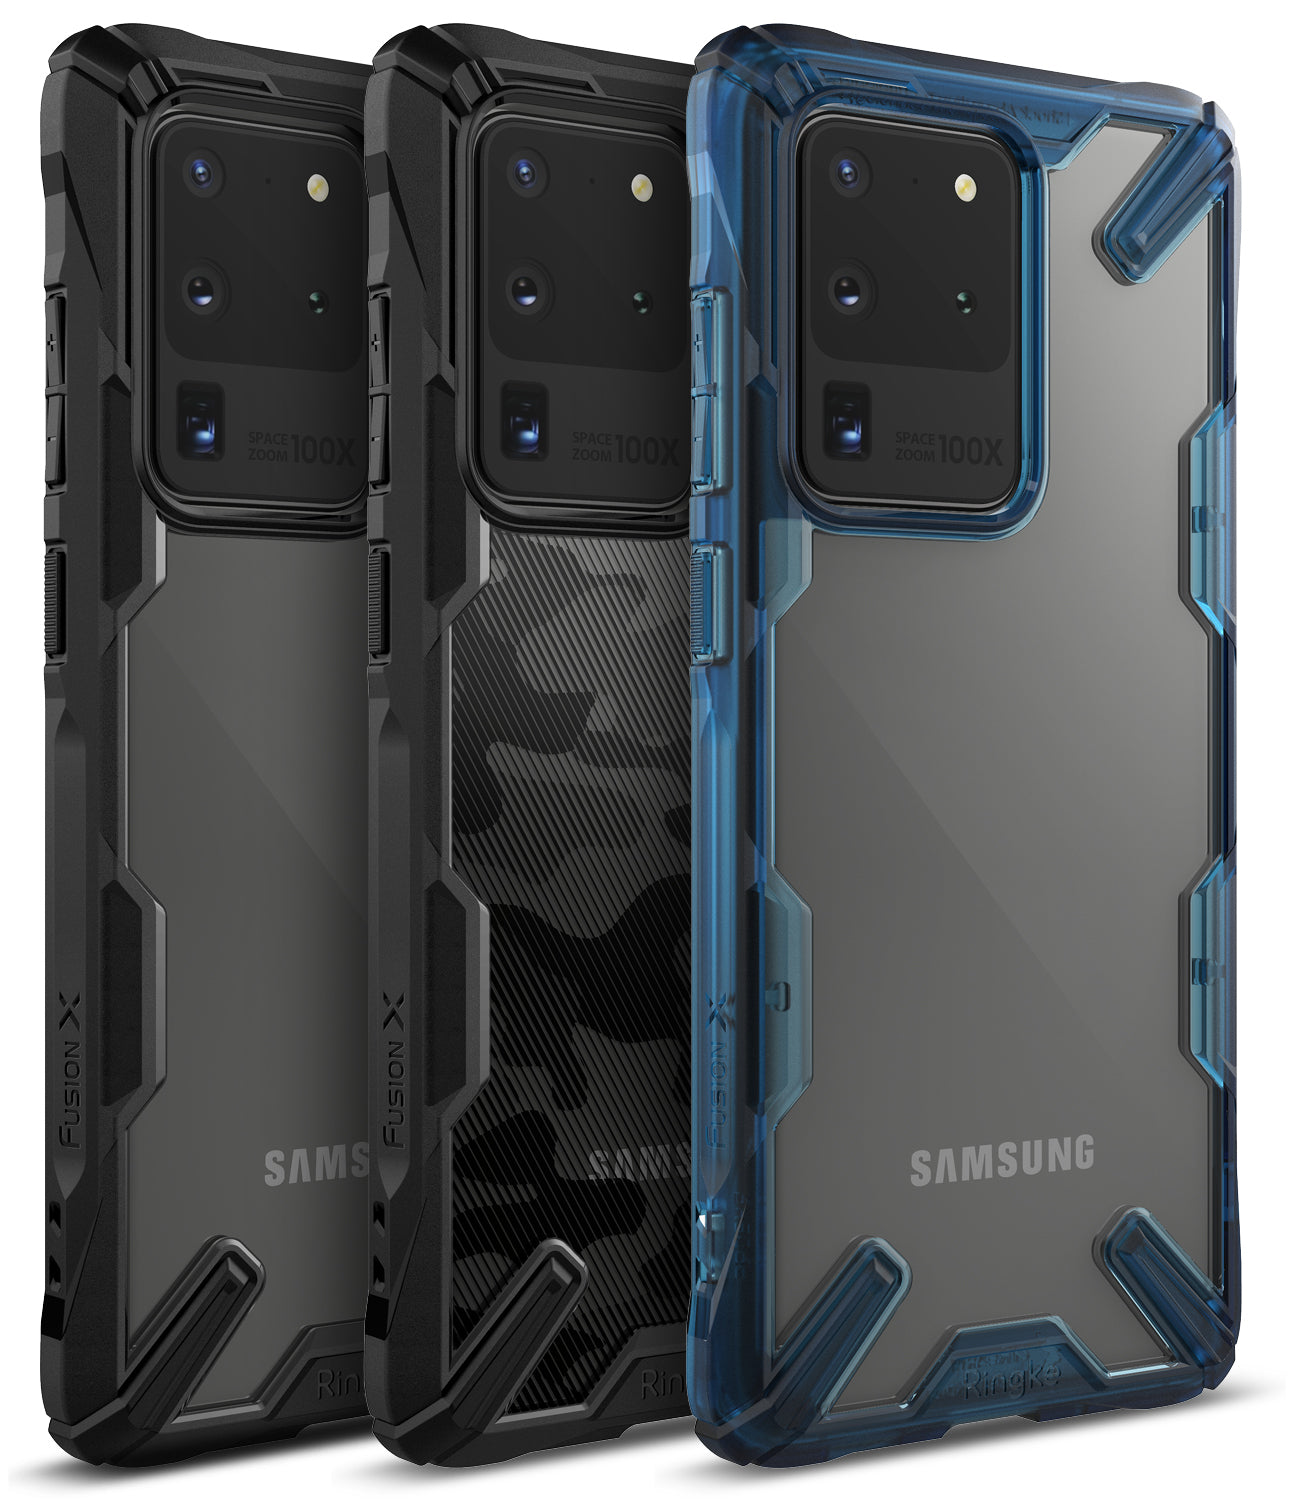 Ringke Fusion-X case for Samsung Galaxy S20 Ultra Camo Black, Black, Space Blue Colors